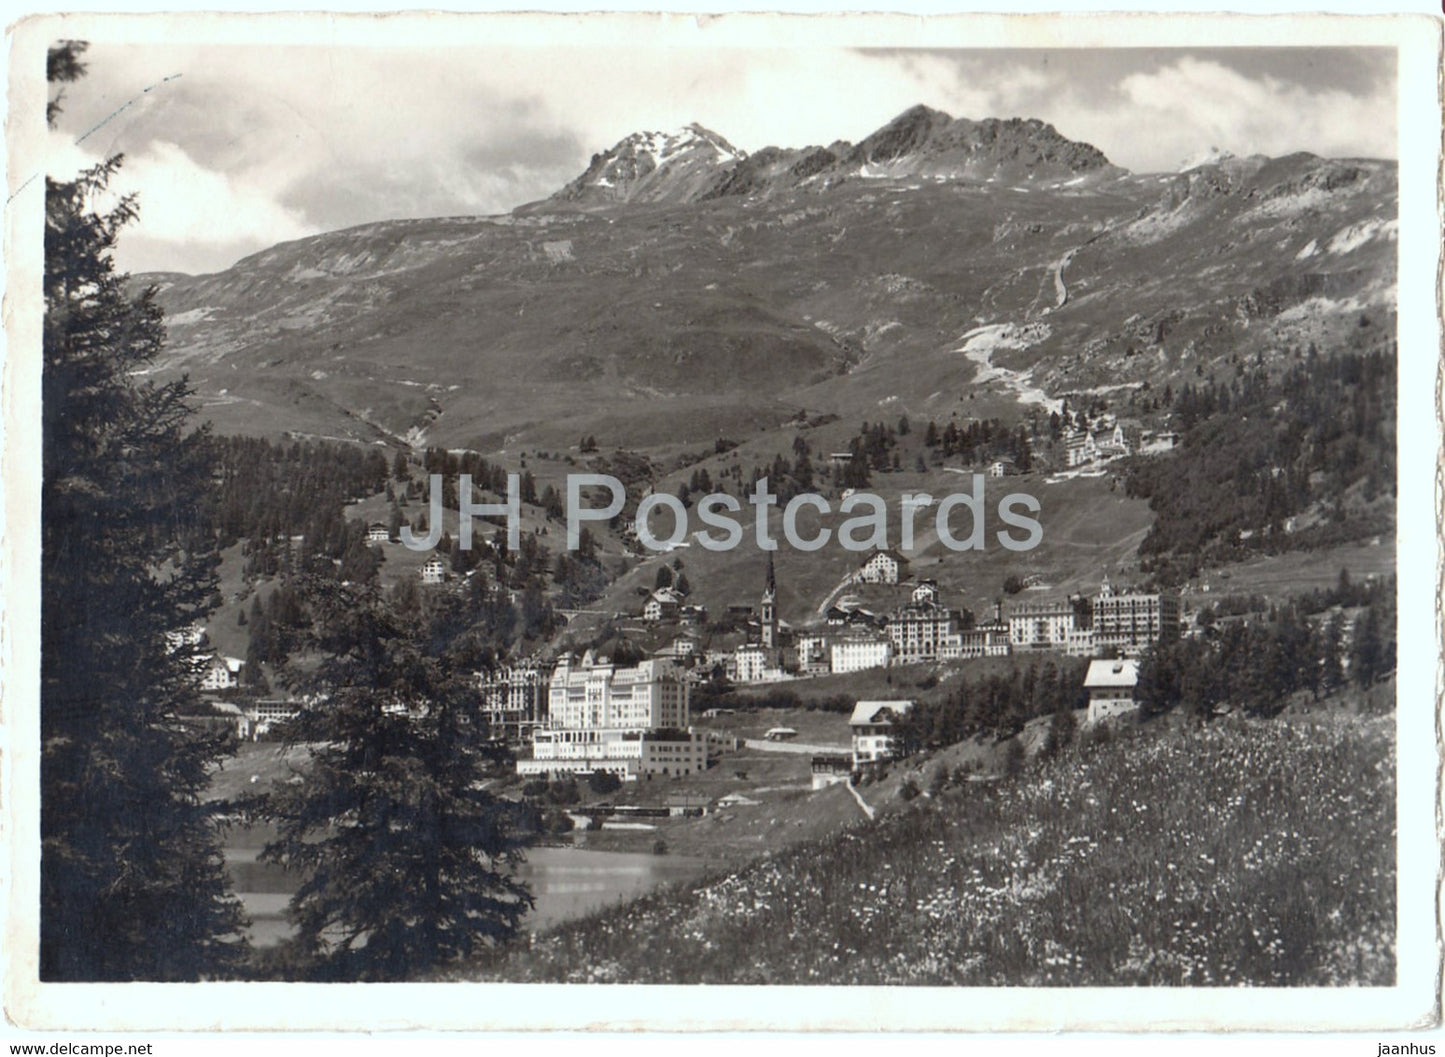 St Moritz - 1105 - old postcard - 1951 - Switzerland - used - JH Postcards